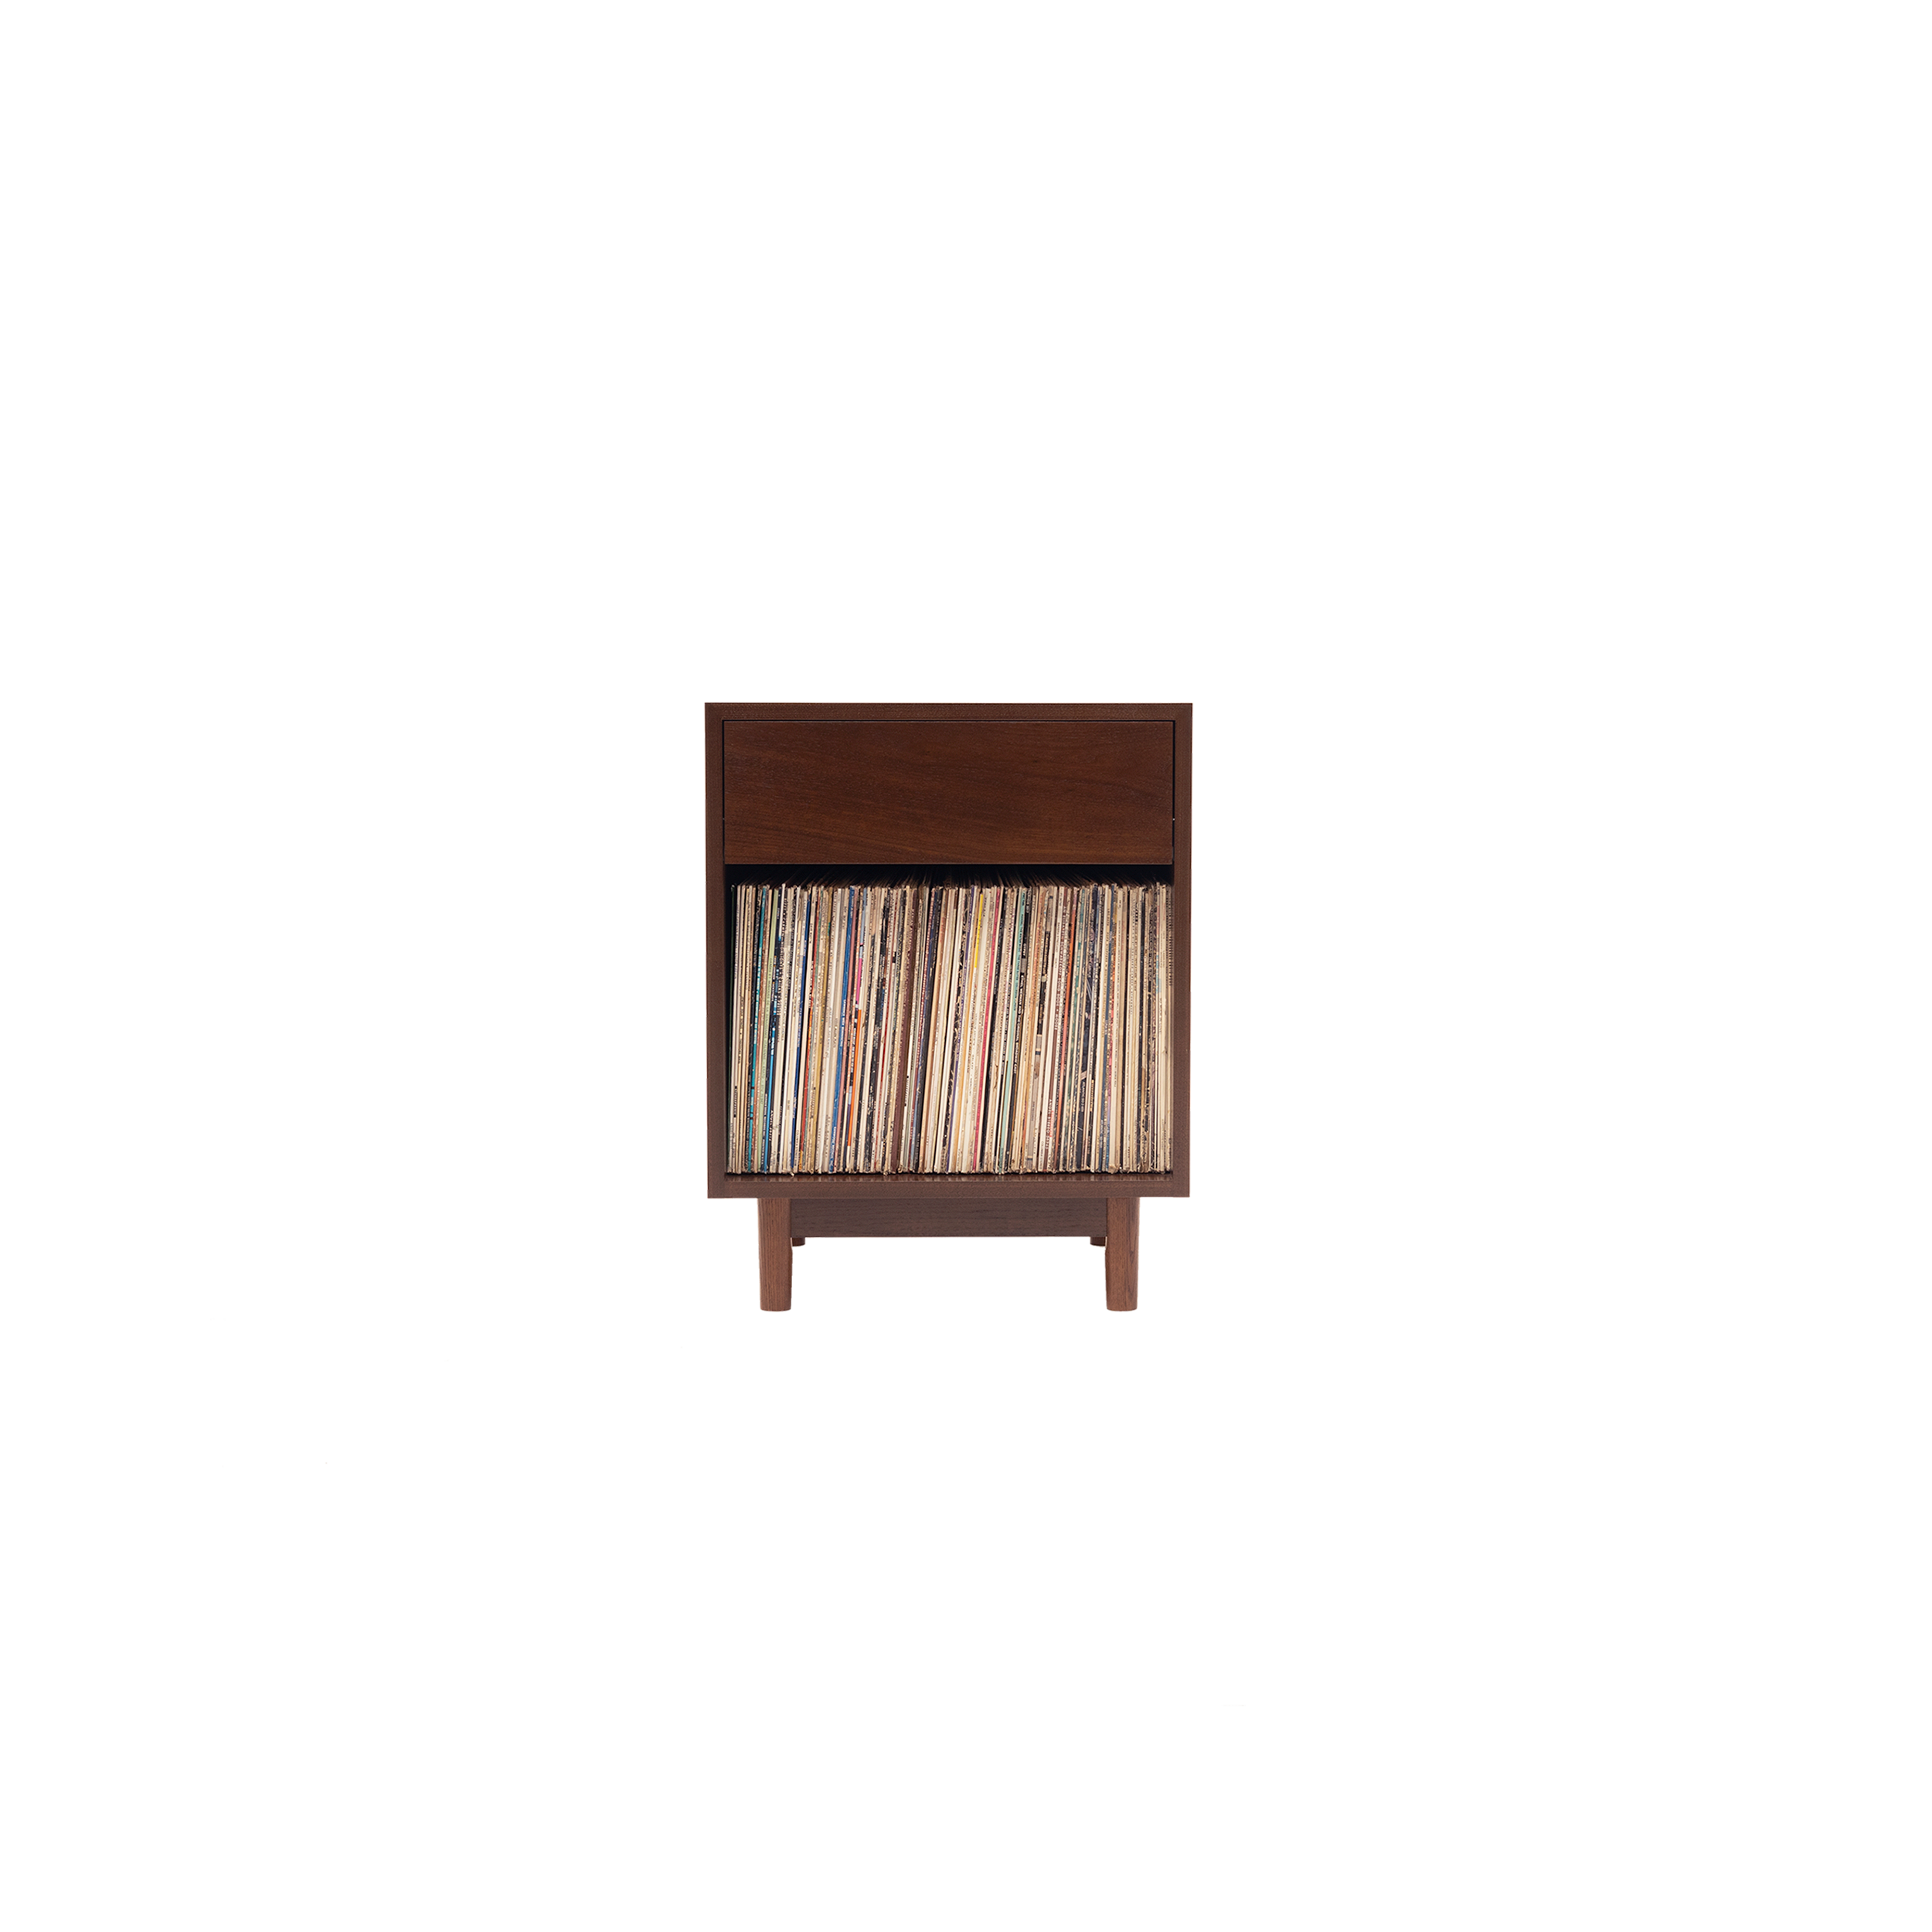 1 x 1 Record Storage Cabinet